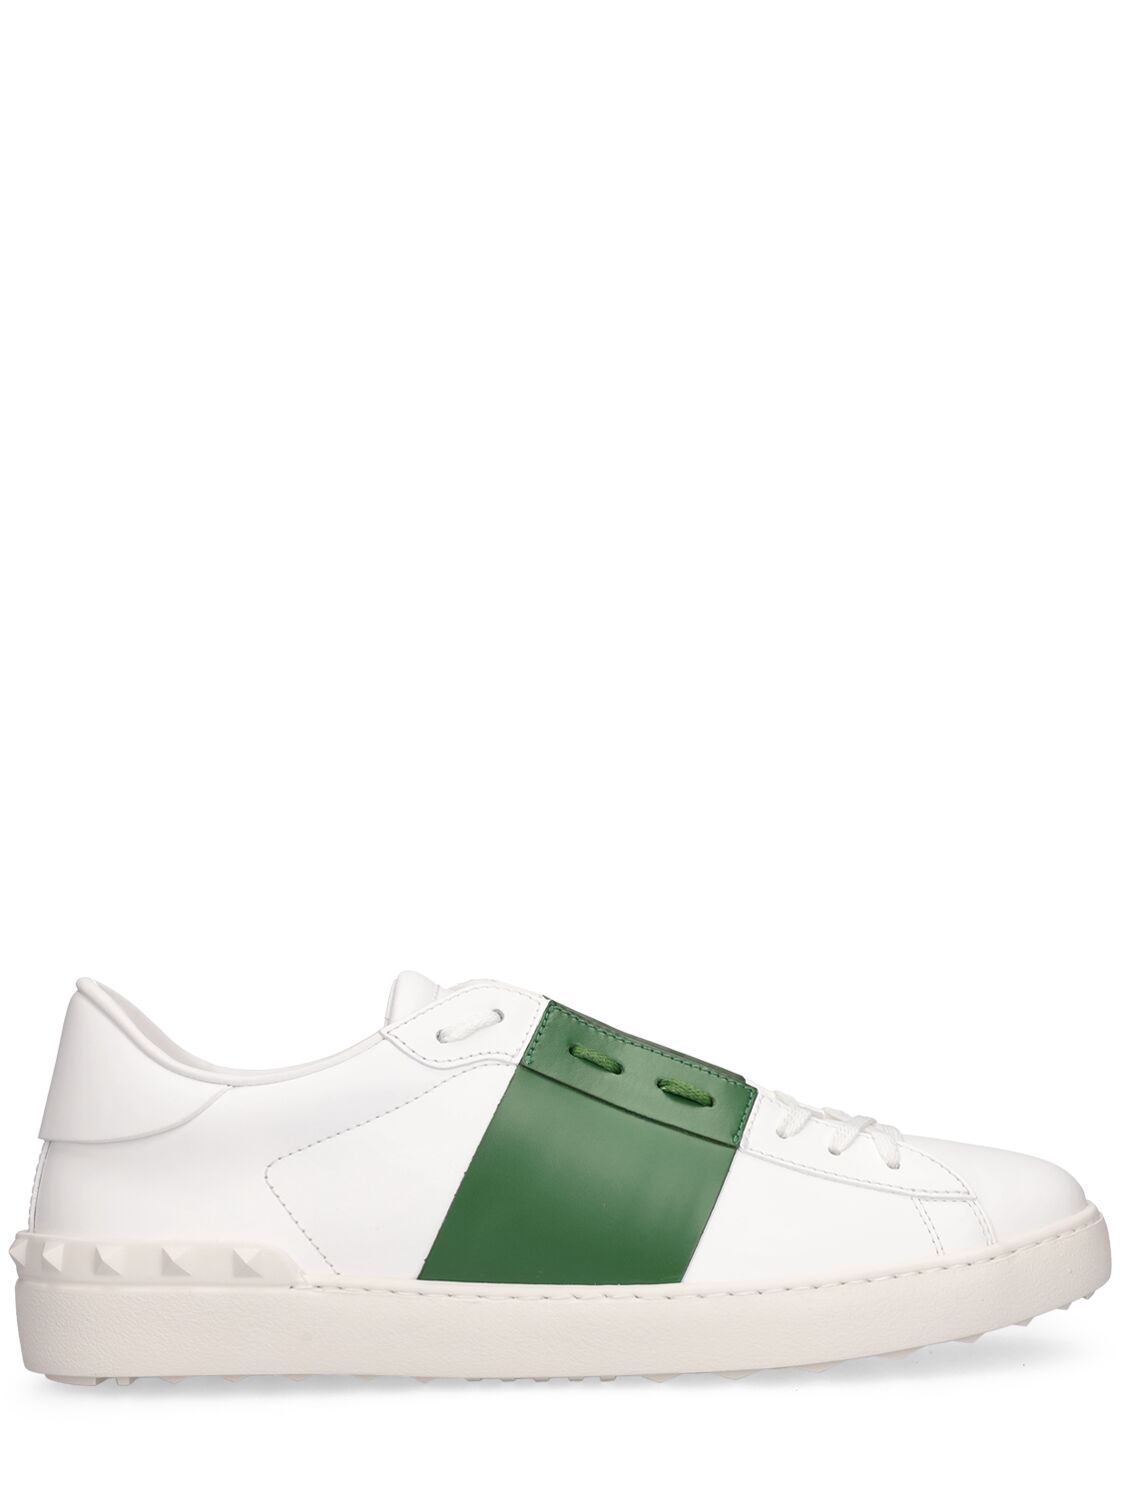 Valentino Garavani Open Leather Low Top Sneakers In White,green